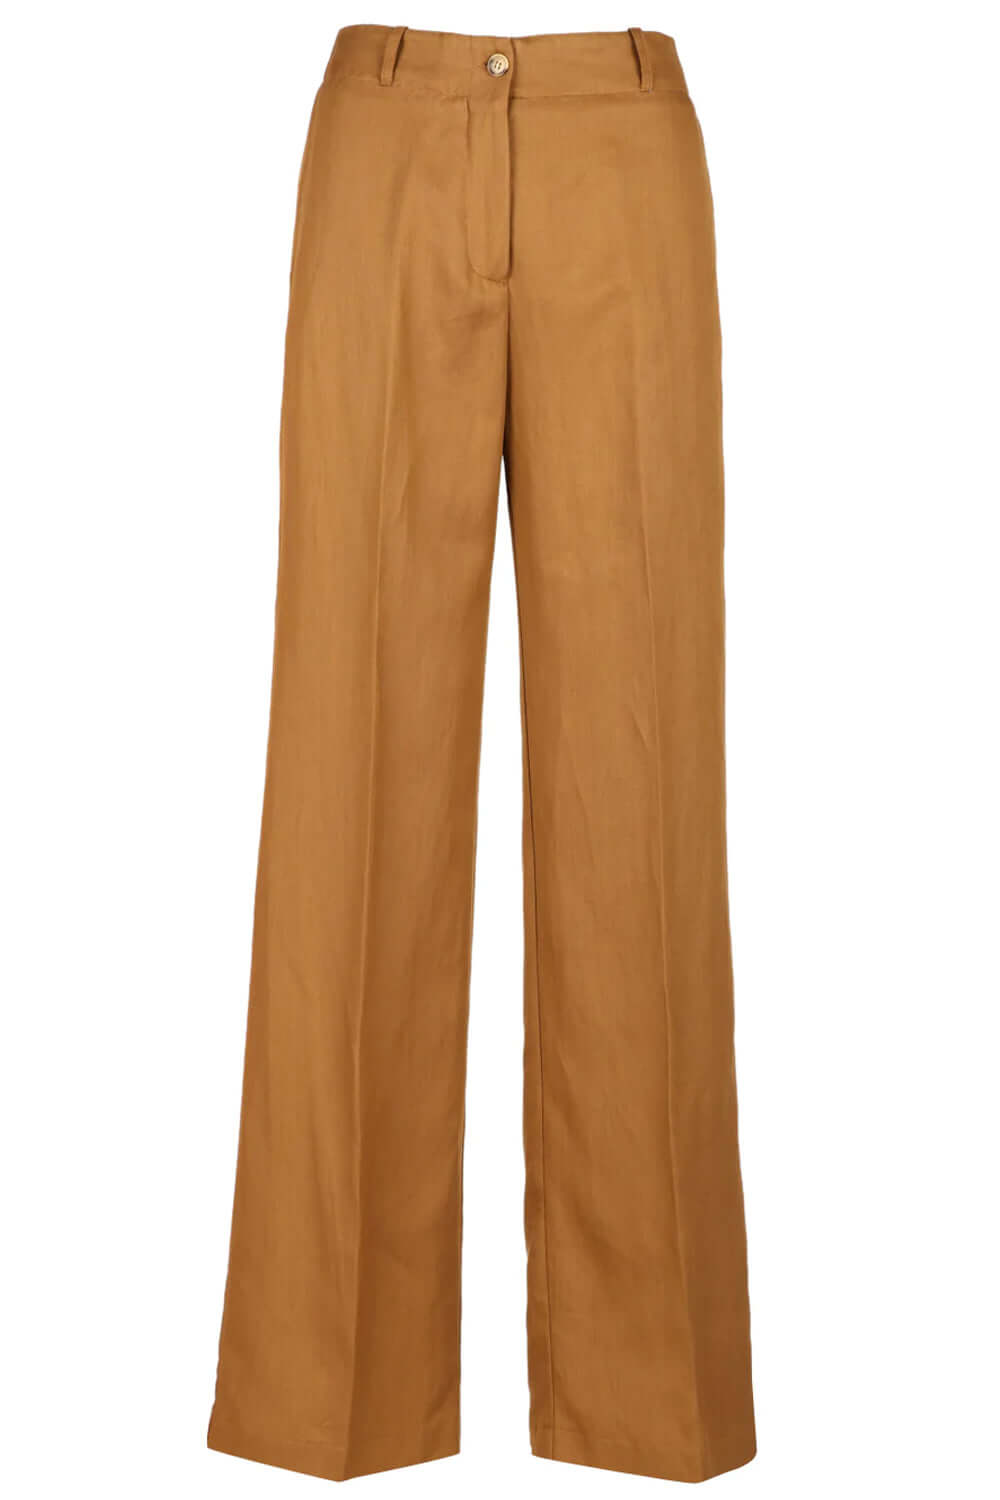 Pantalone in lino e cotone ampio - SUOLI Pantaloni e jeans SUOLI   